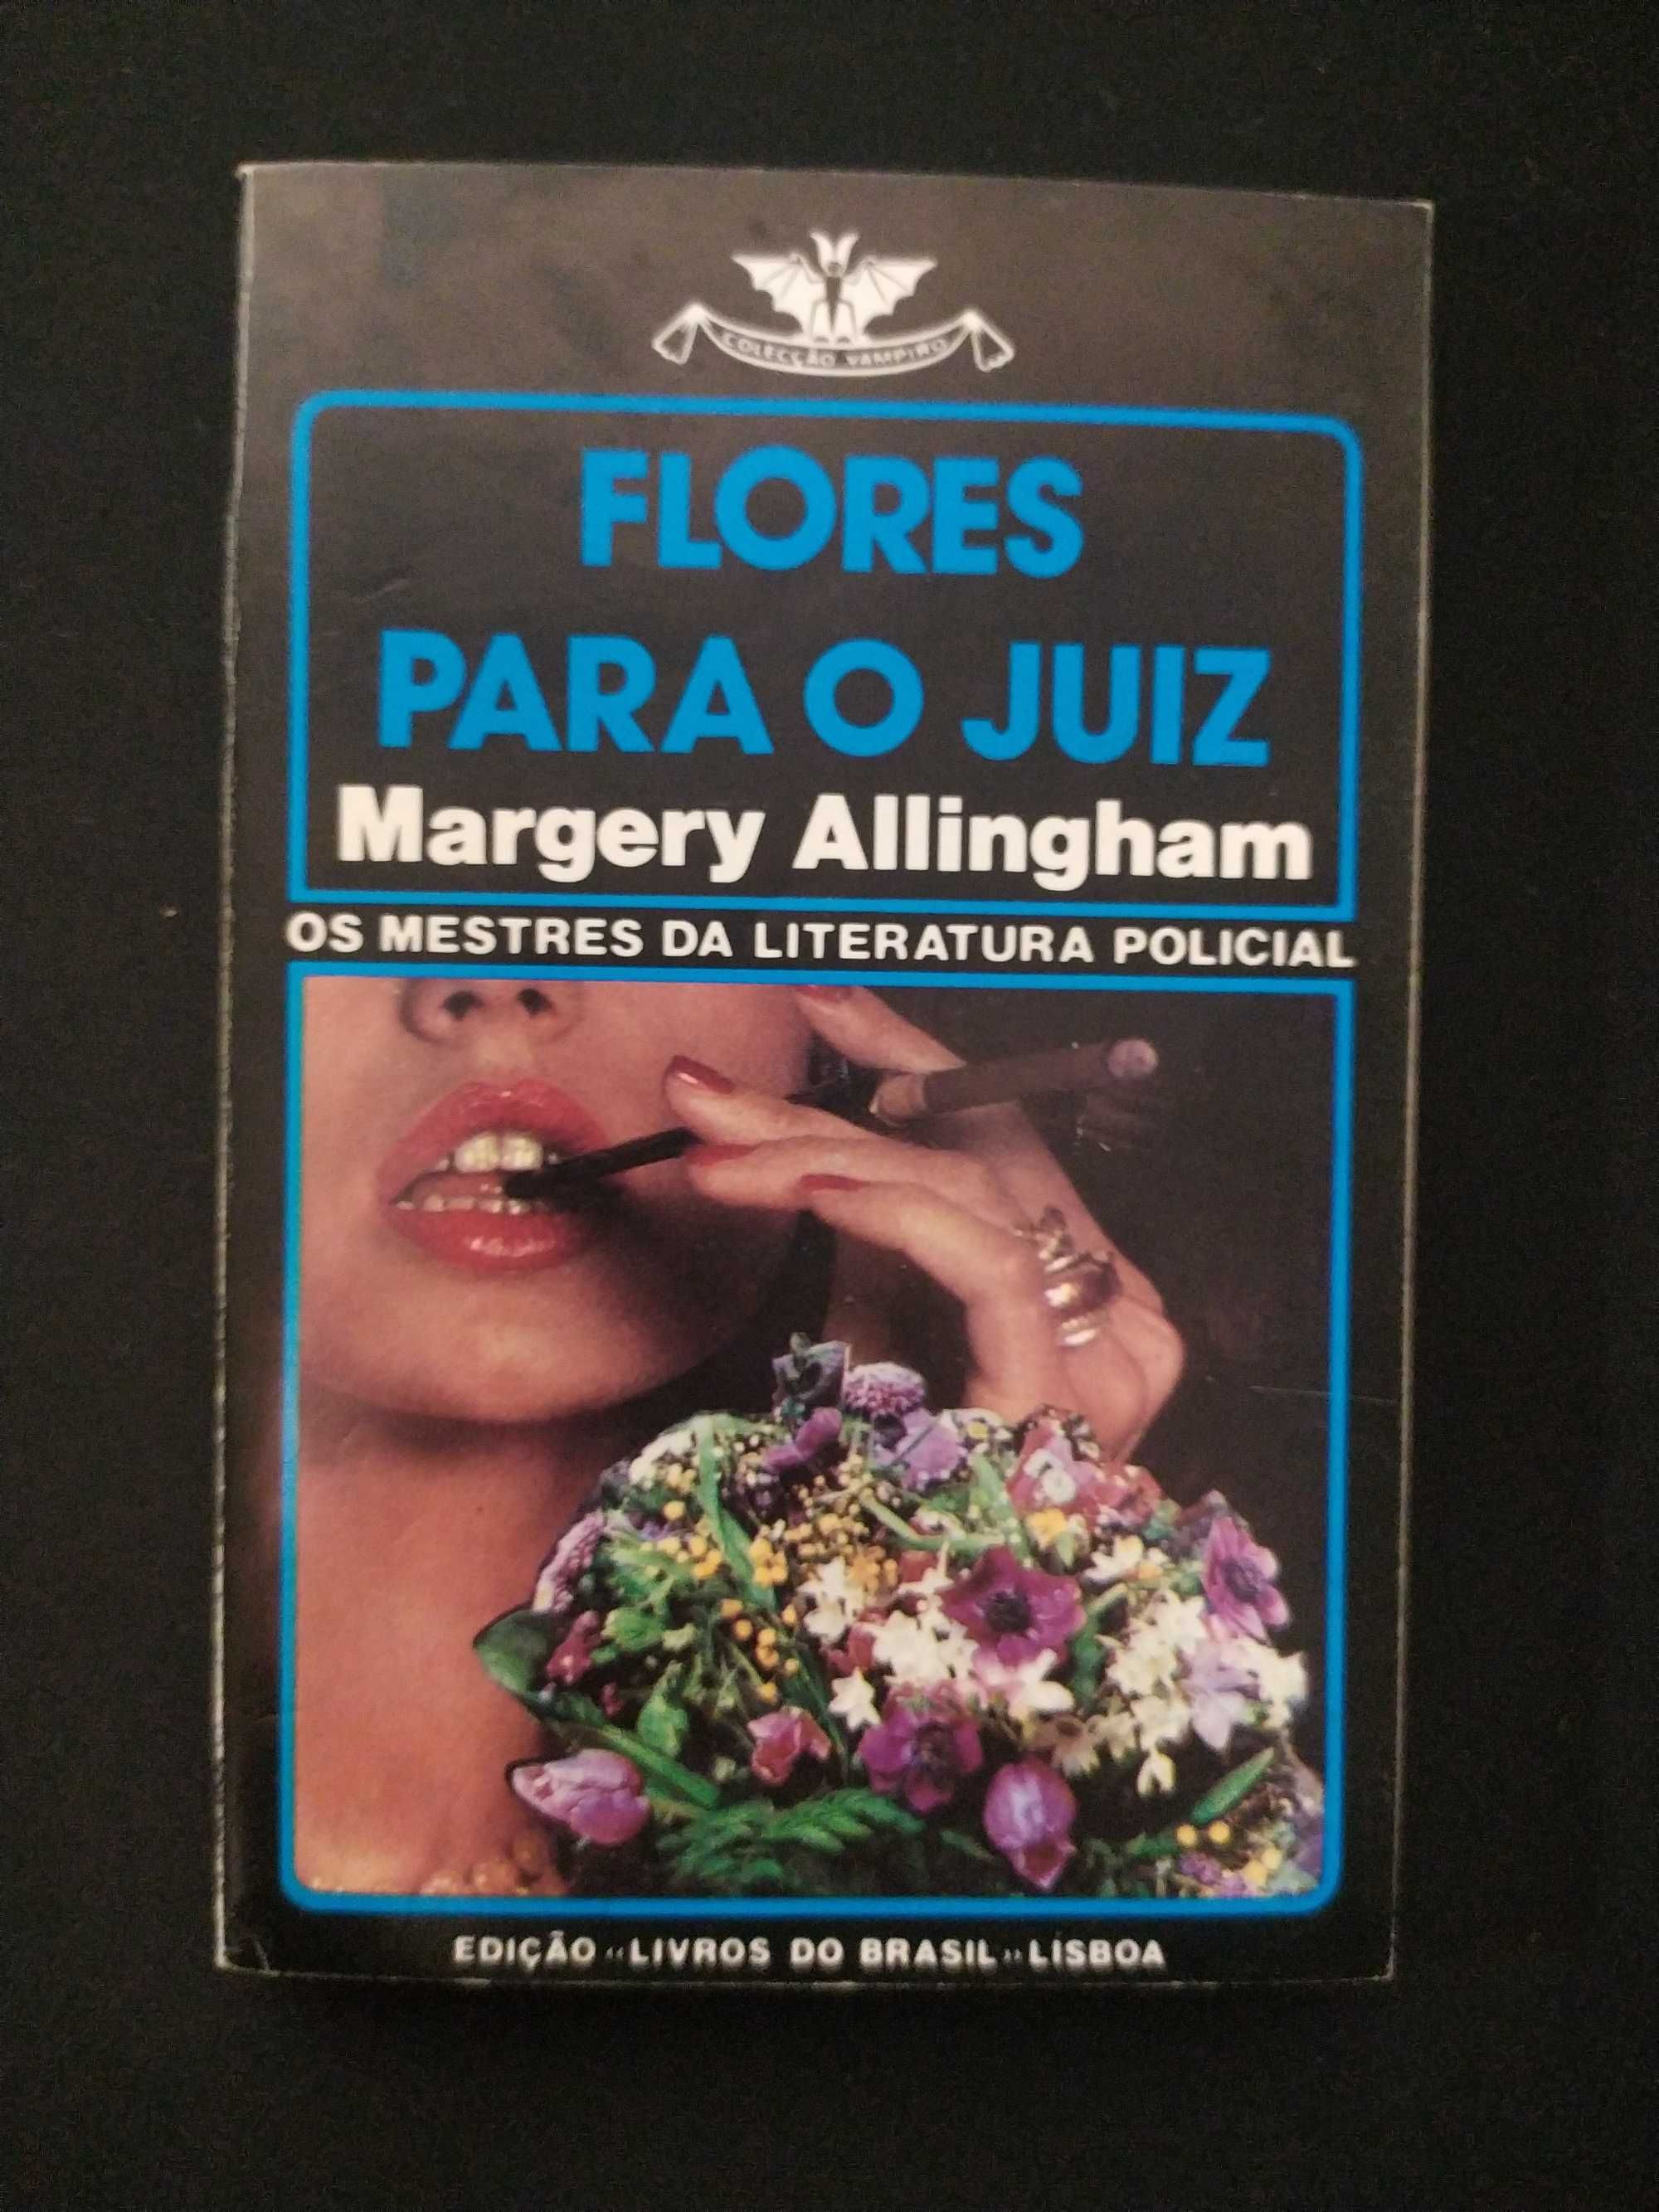 Margery Allingham - Flores para o juiz